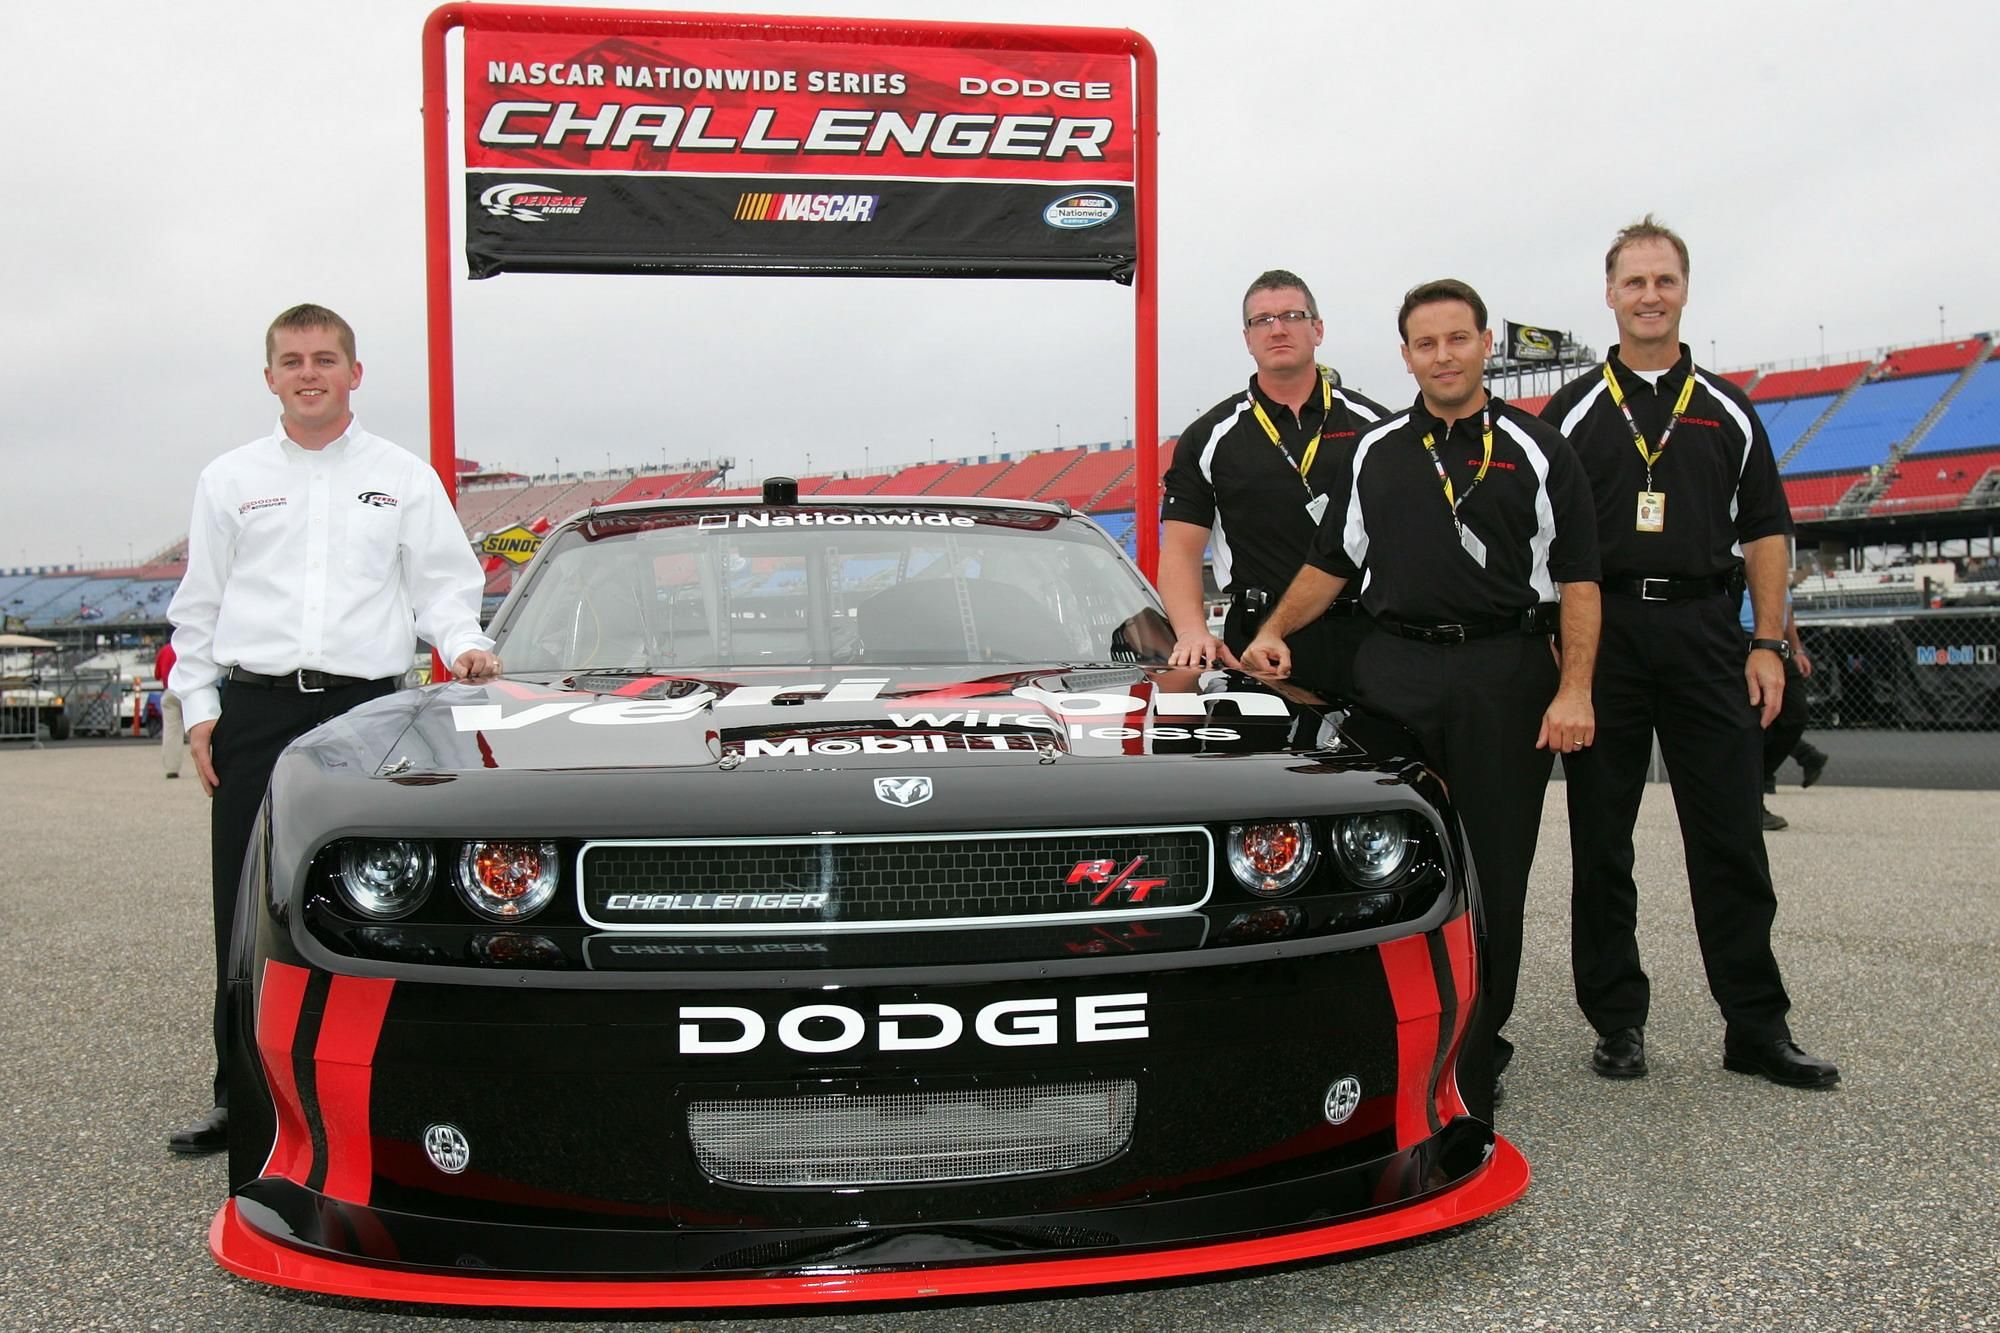 2009 Dodge Challenger for NASCAR Nationwide Series